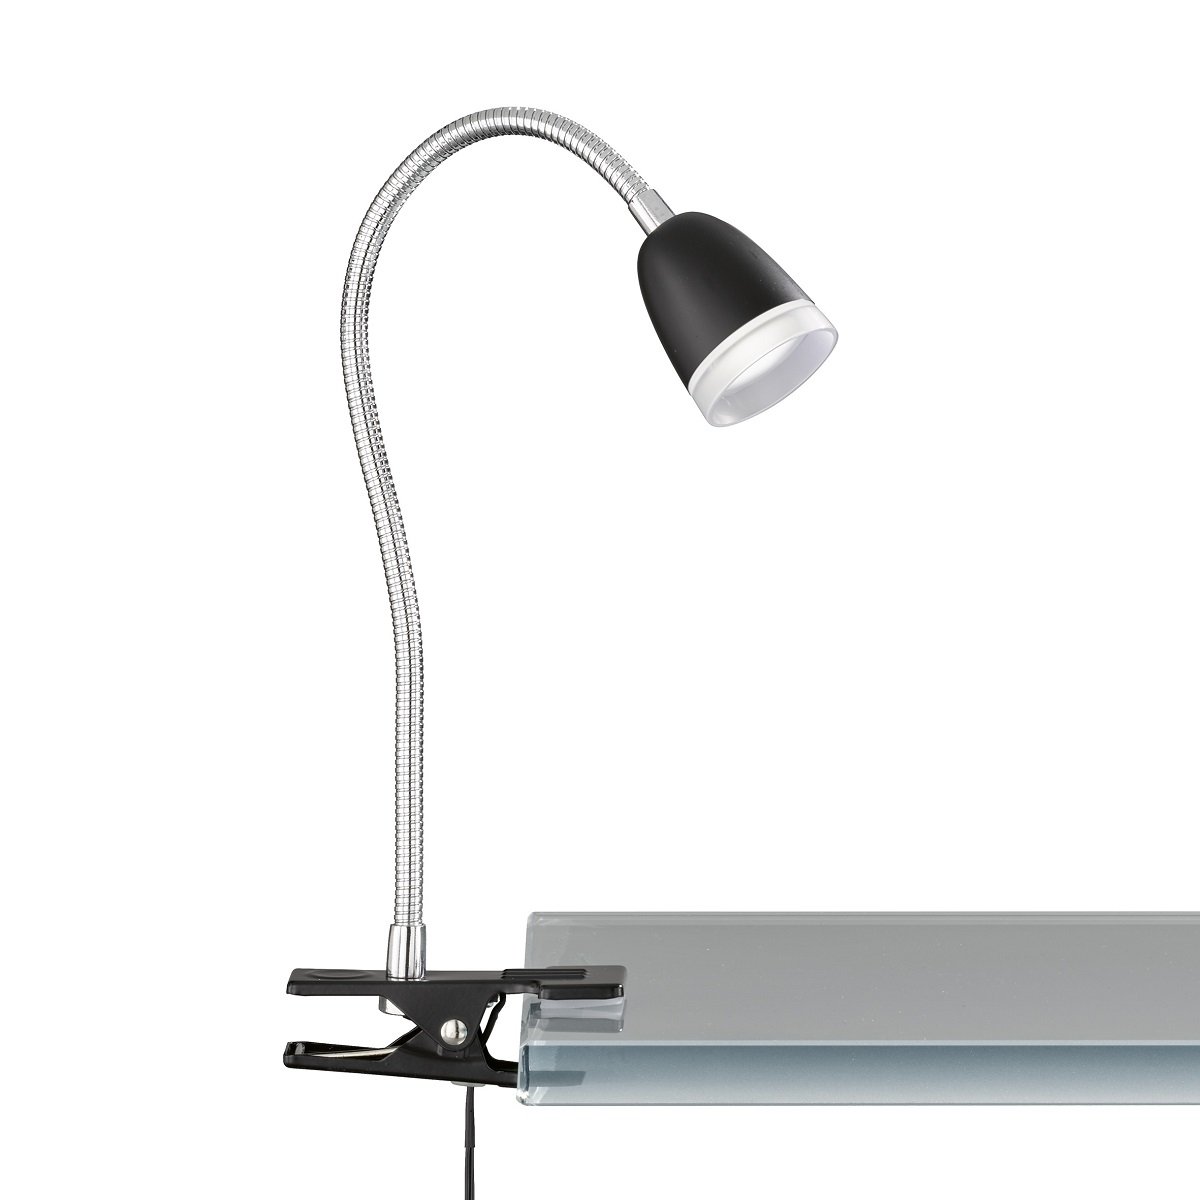 FHL easy 850635 LED Klemmleuchte Nox schwarz chromfarben 3000K --> Leuchten  & Lampen online kaufen im Shop lightkontor.d